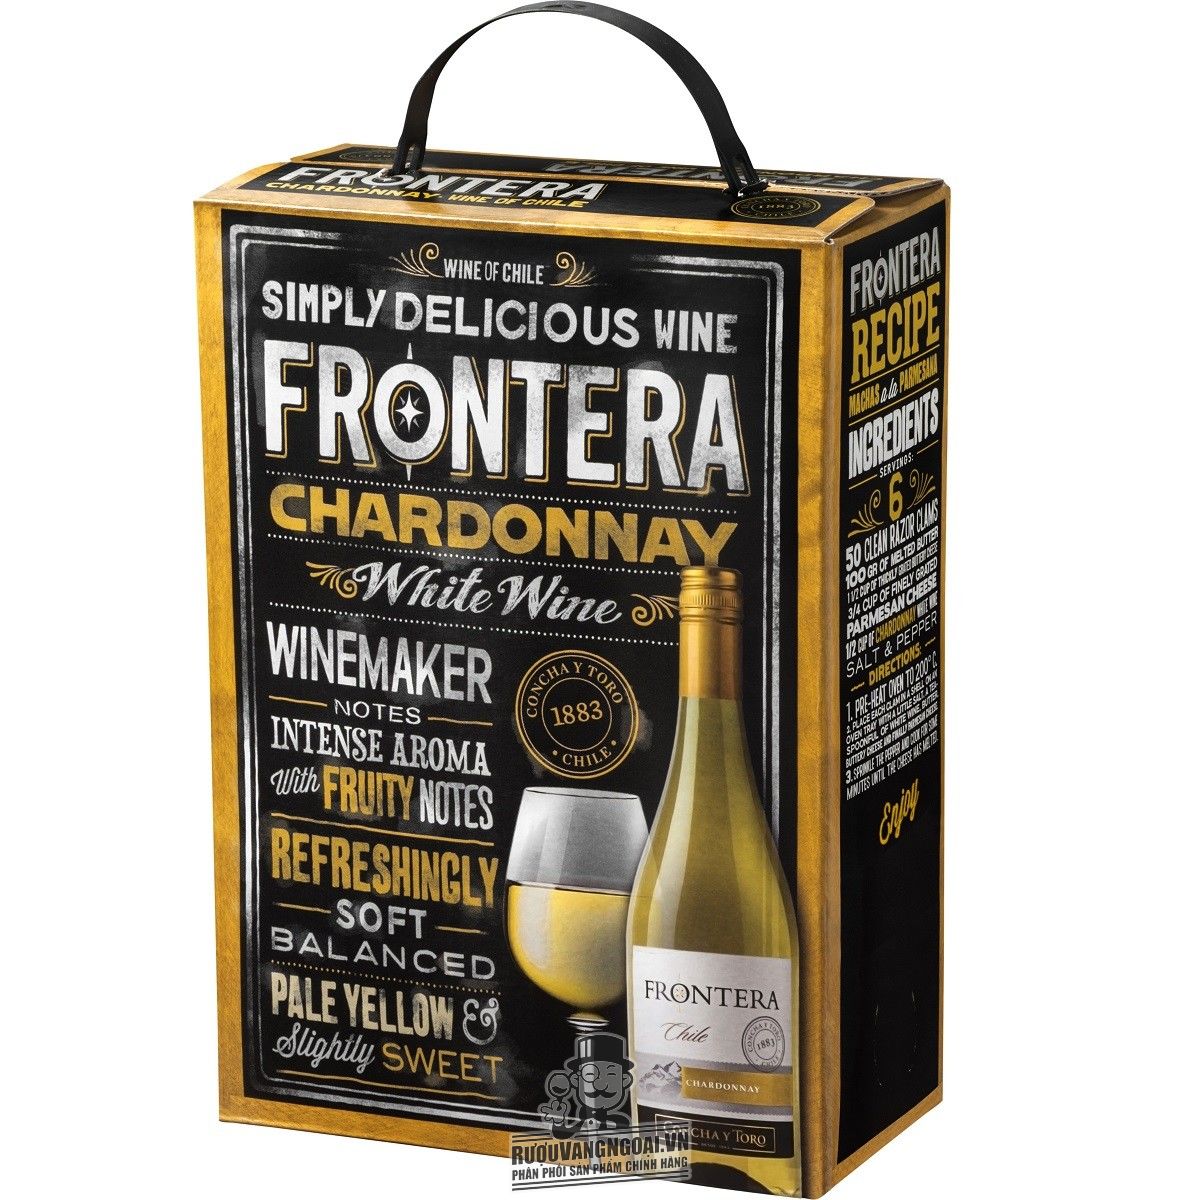 Vang bịch trắng Chile Frontera Chardonnay 3L